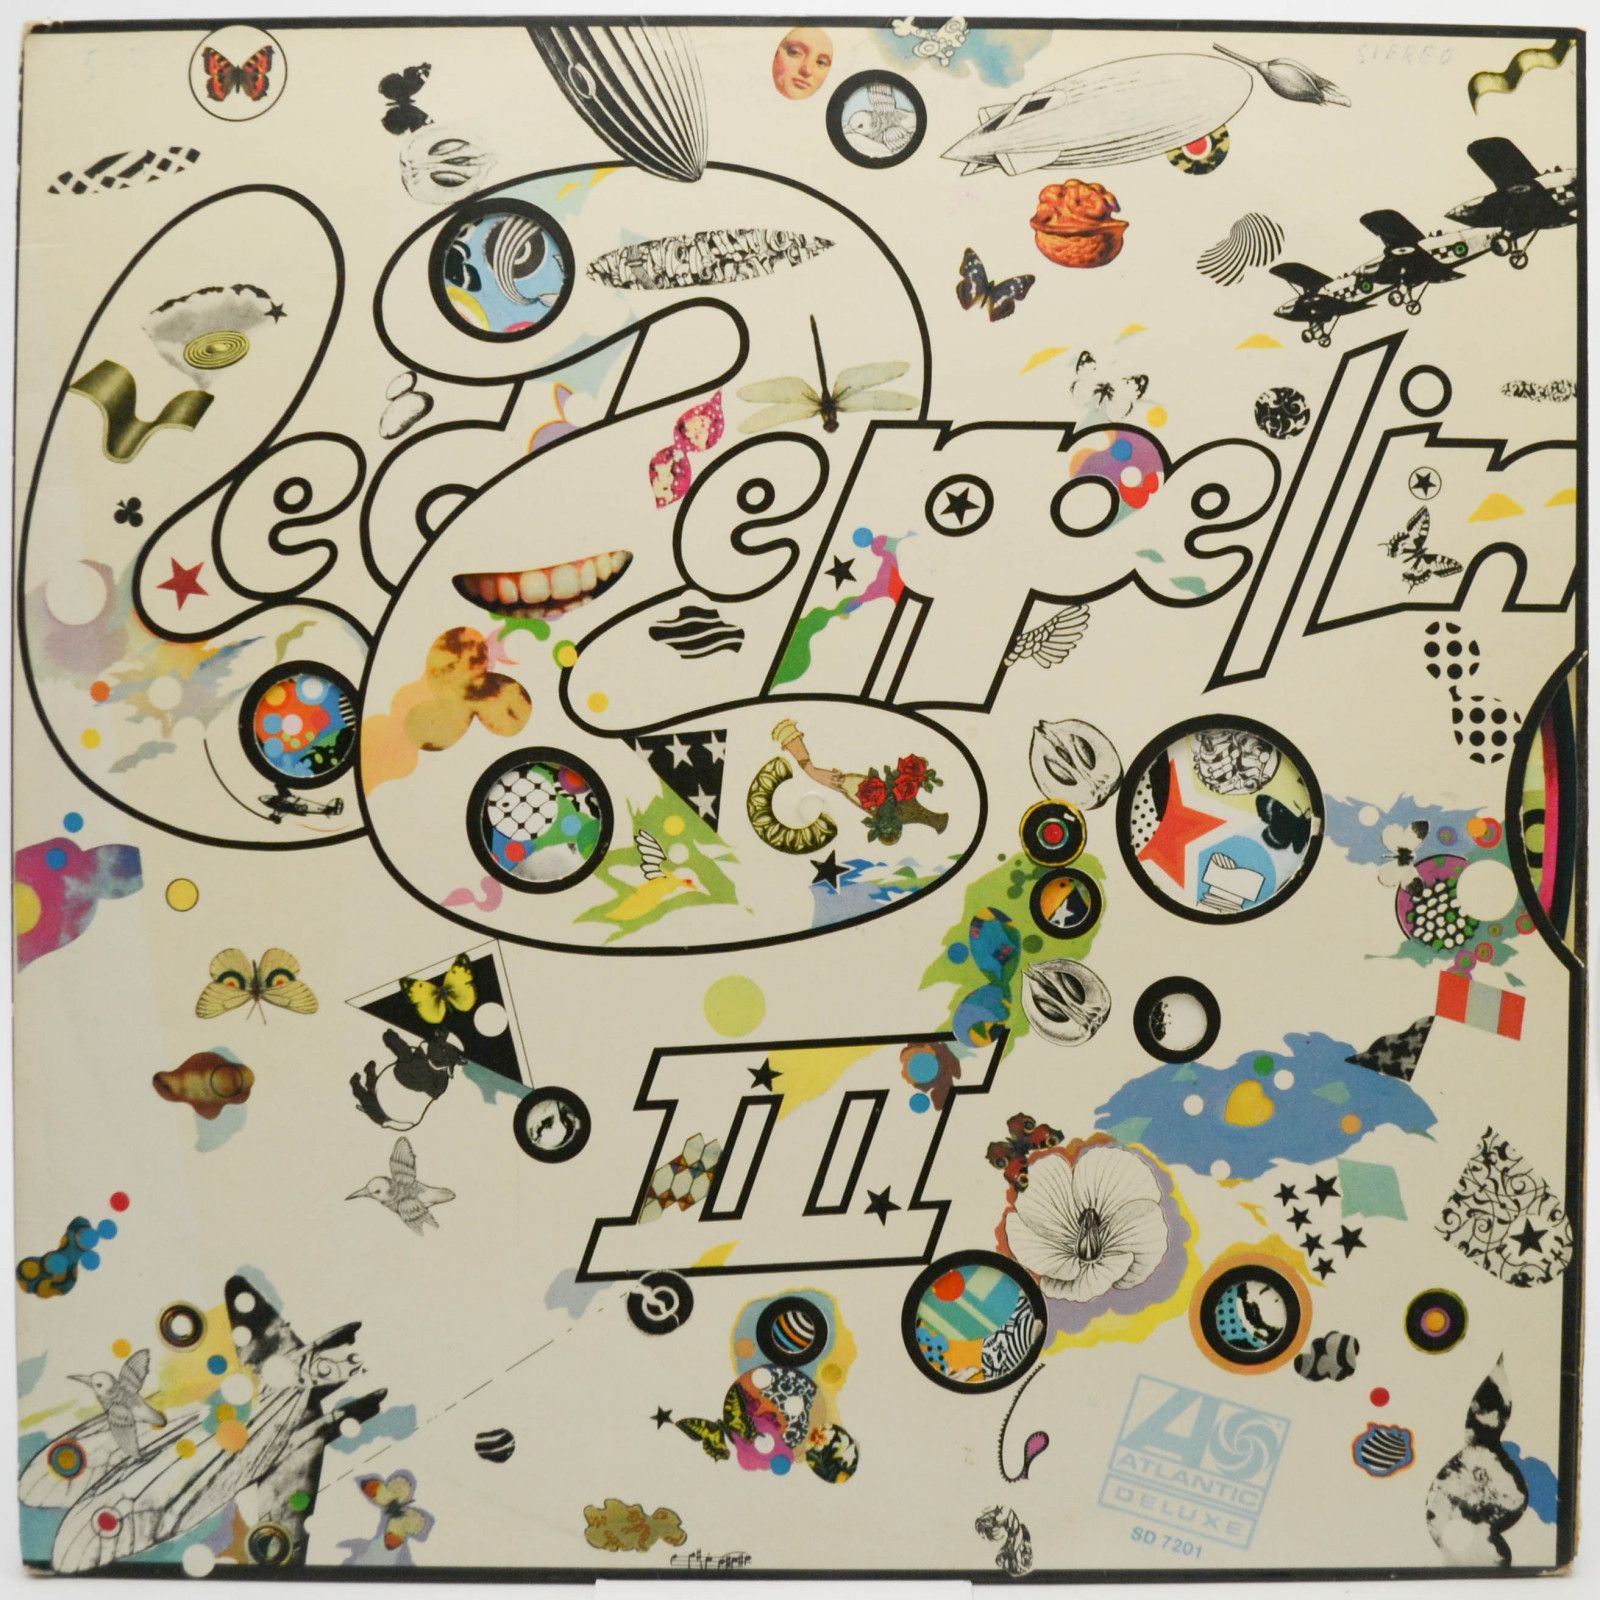 Led Zeppelin — Led Zeppelin III, 1970